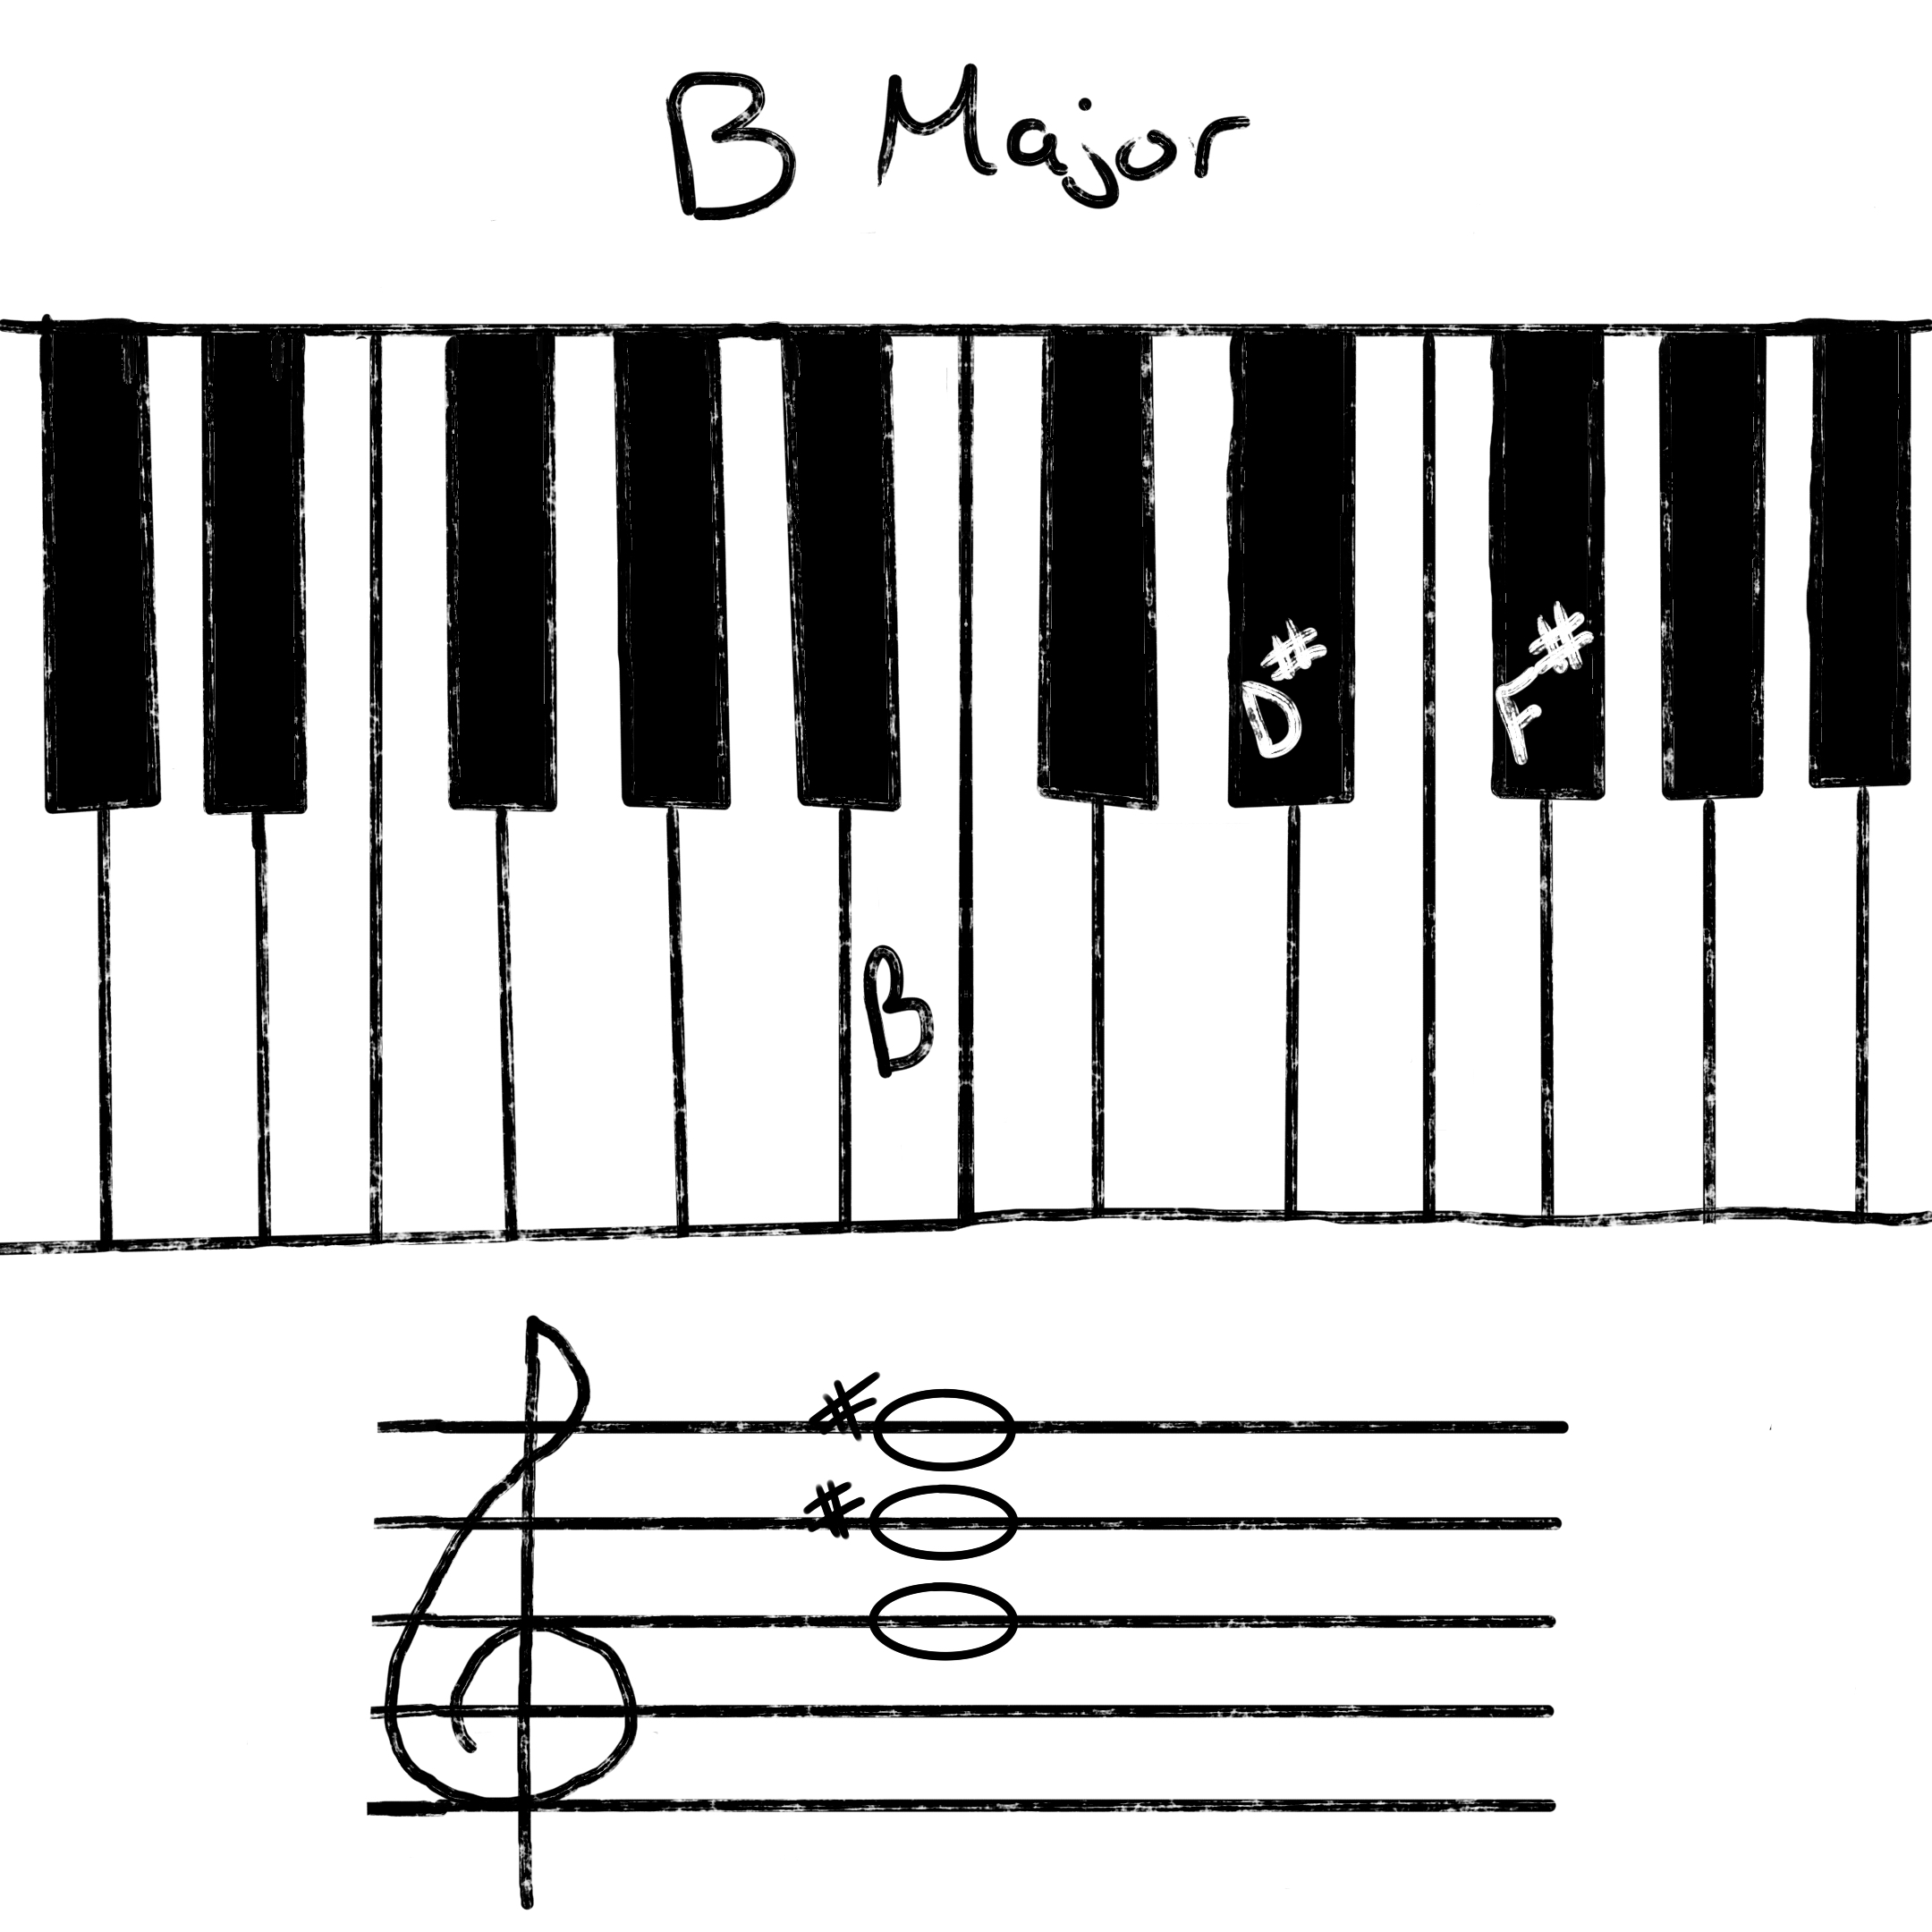 B major